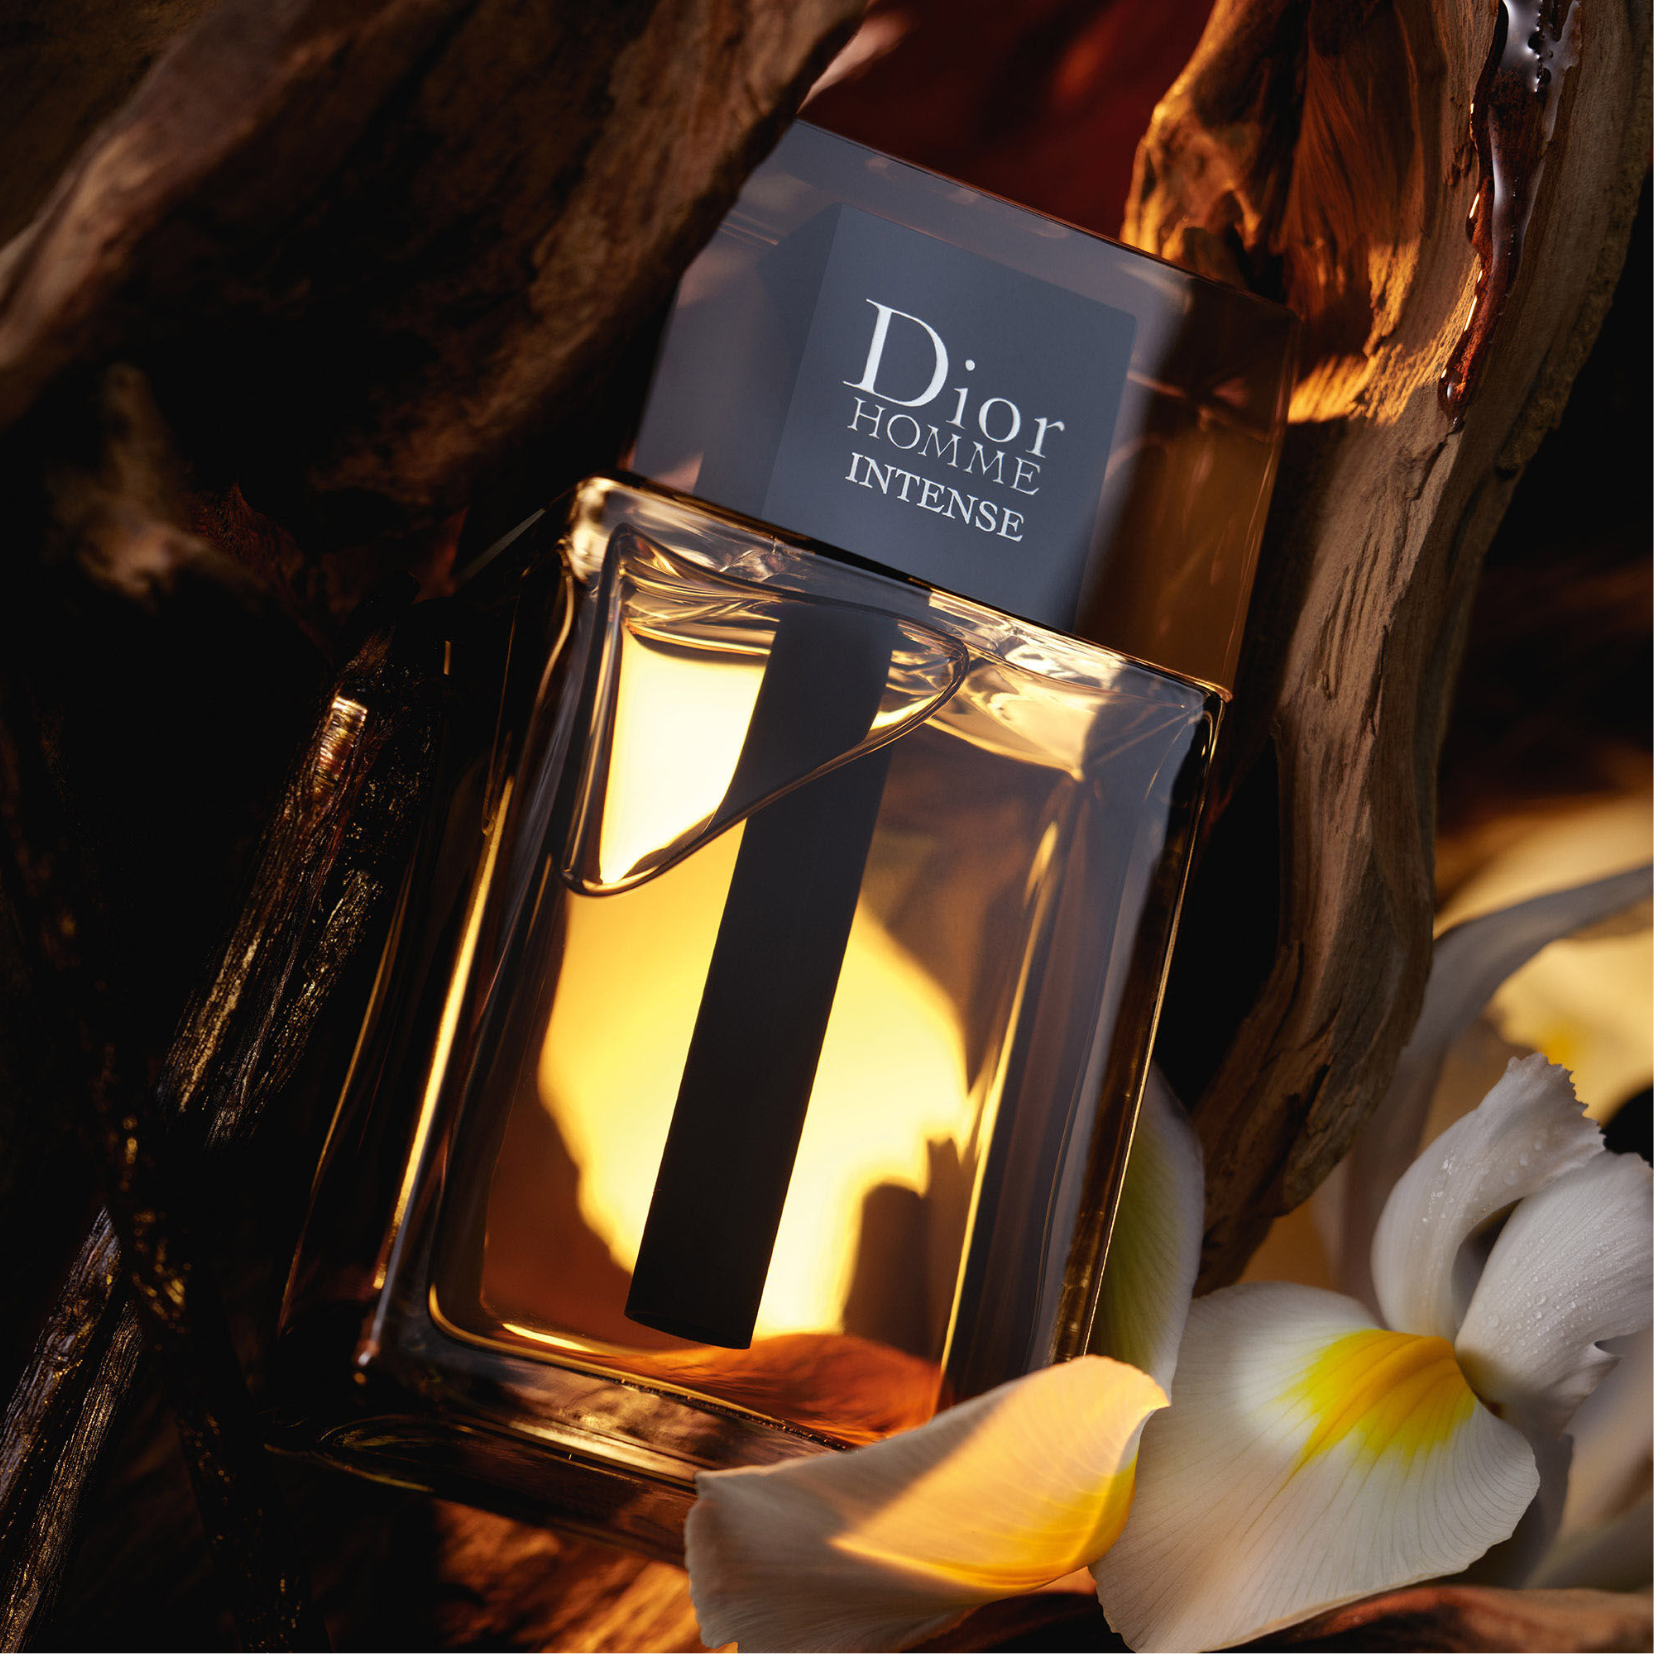 Christian Dior, Dior Homme Intense, Perfume Samples